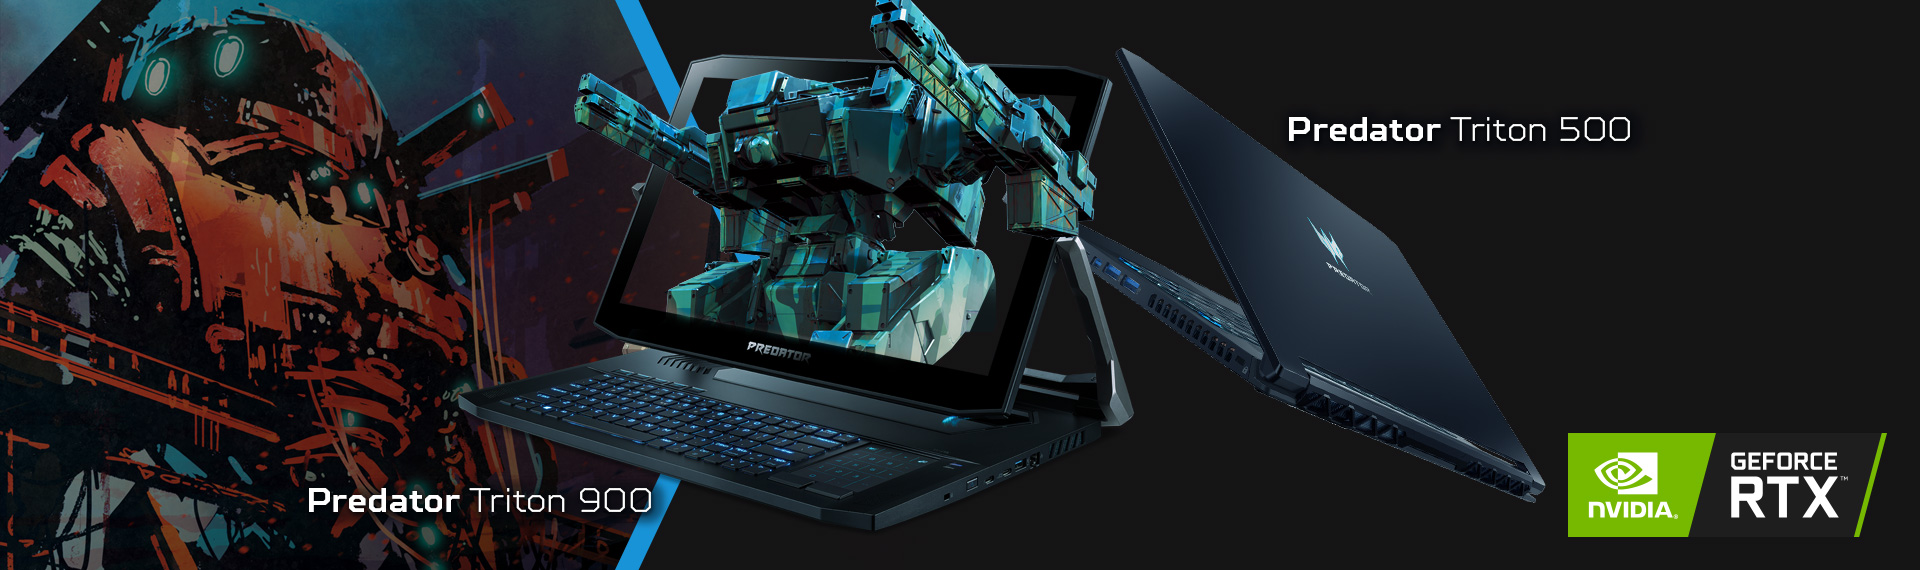 Peluncuran Dua Laptop Gaming Inovatif, Predator Triton NVIDIA RTX Series!